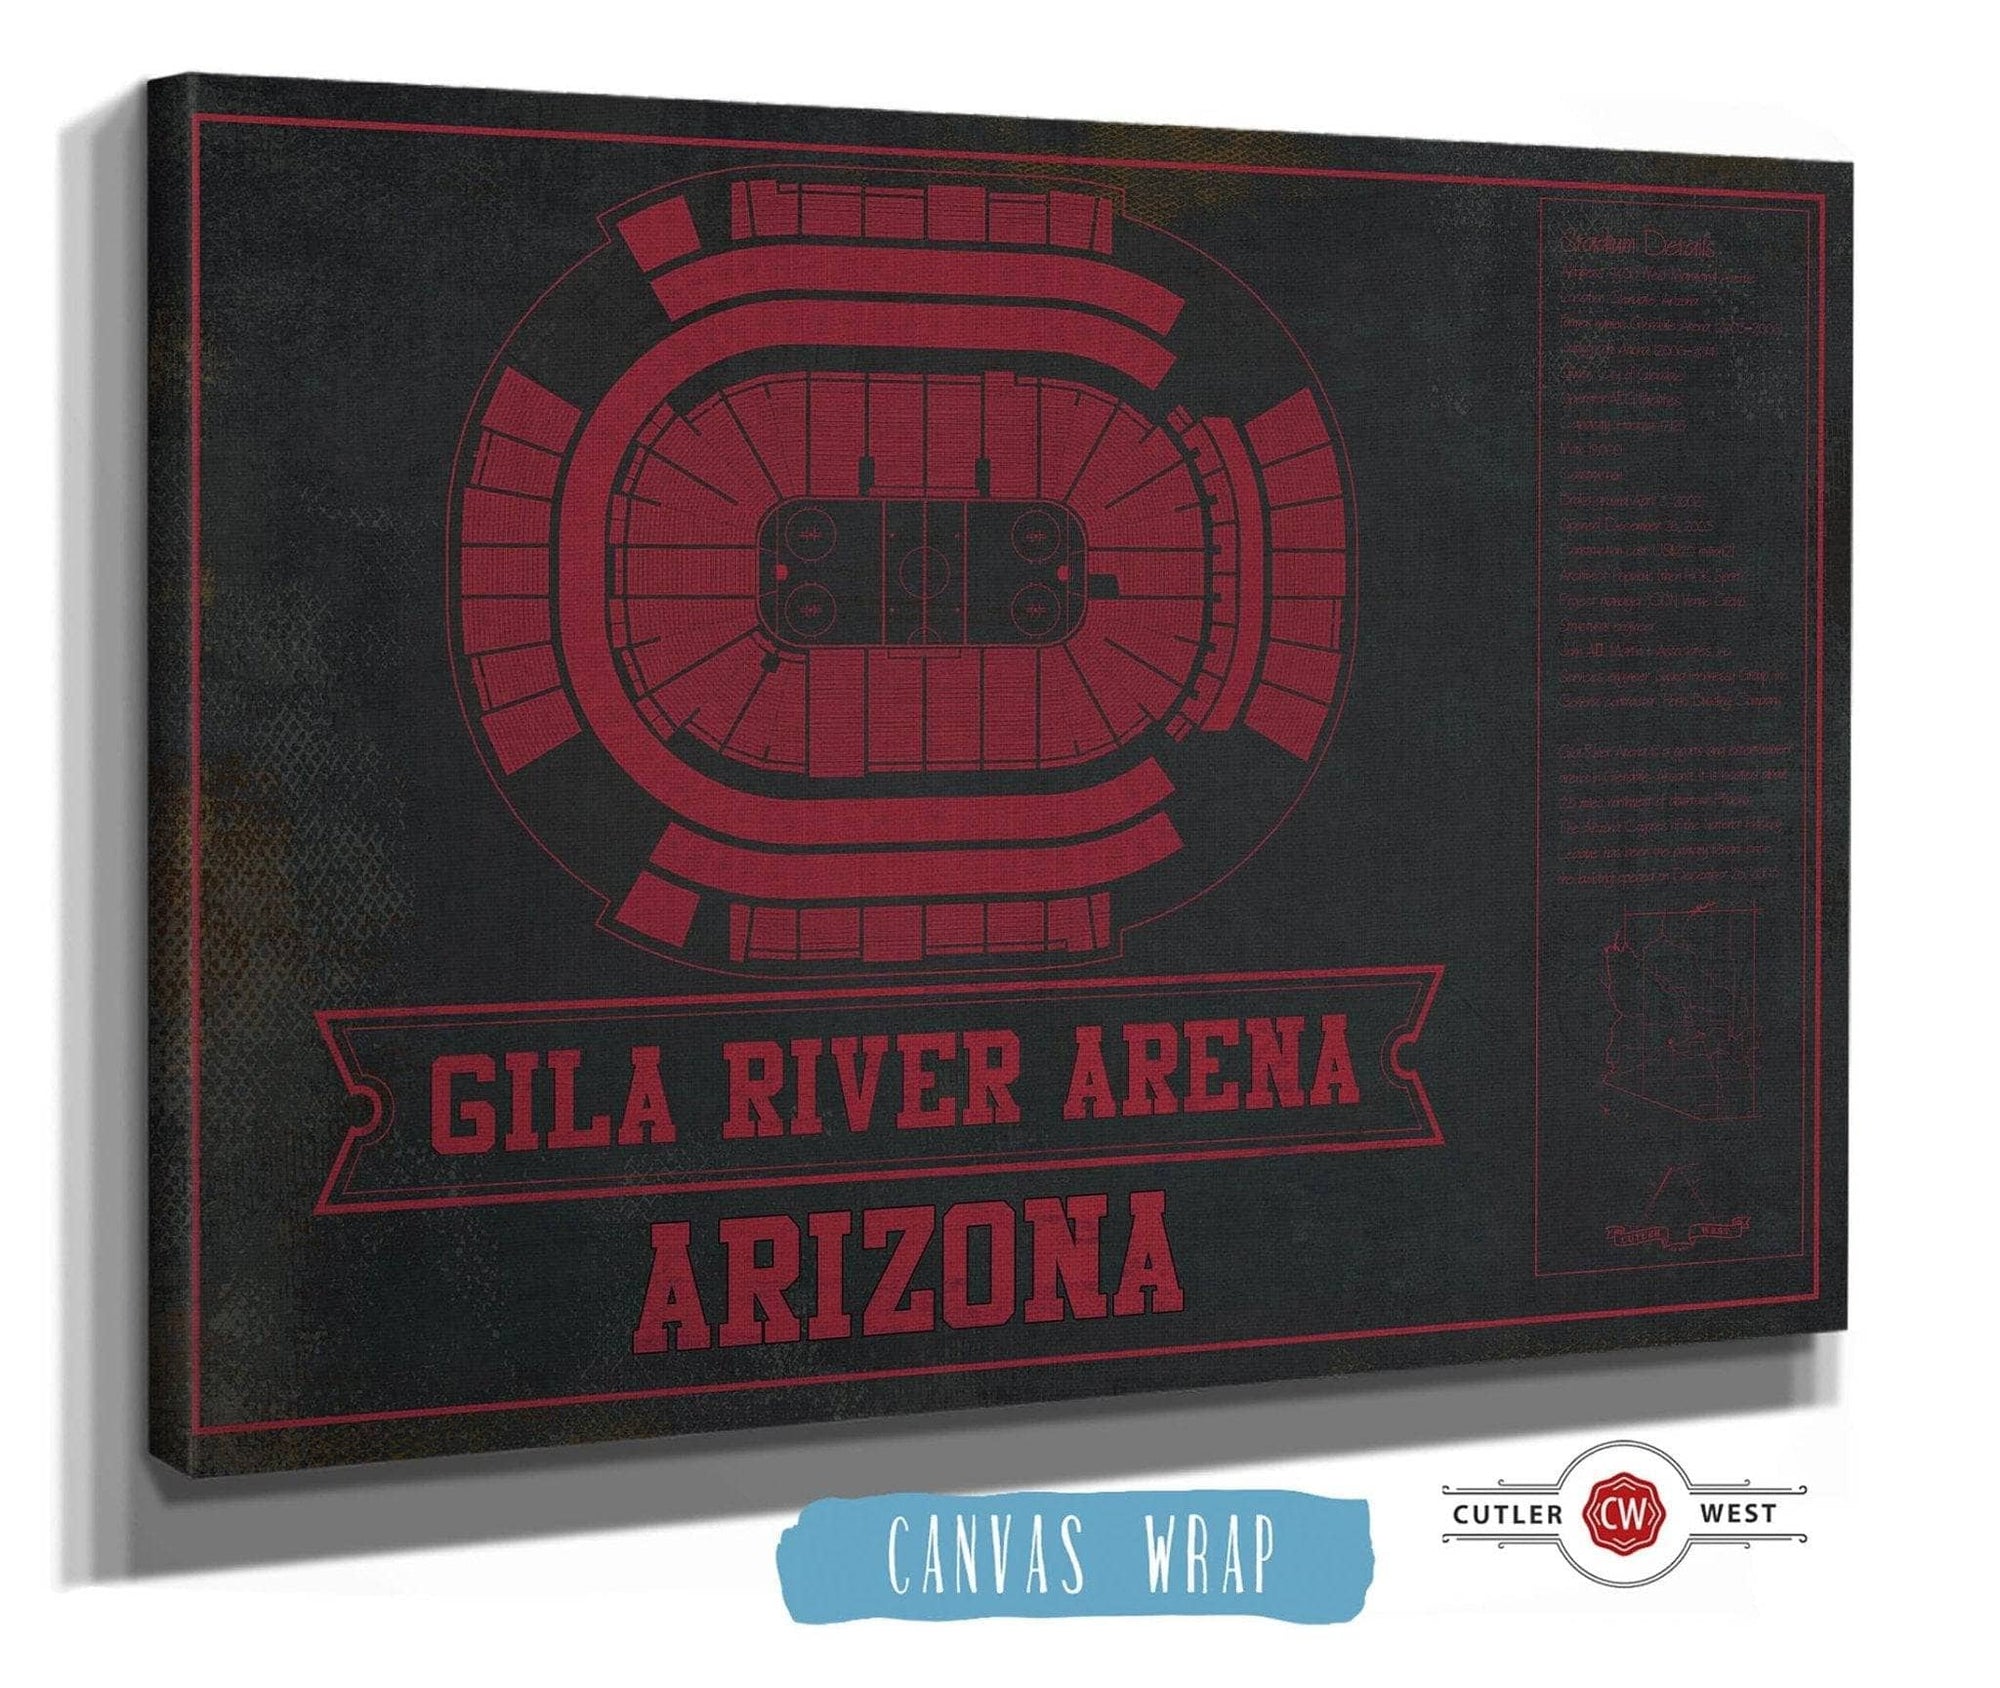 Cutler West 14" x 11" / Stretched Canvas Wrap Arizona Coyotes Team Colors - Gila River Arena Vintage Hockey Blueprint NHL Print 933350182_78416